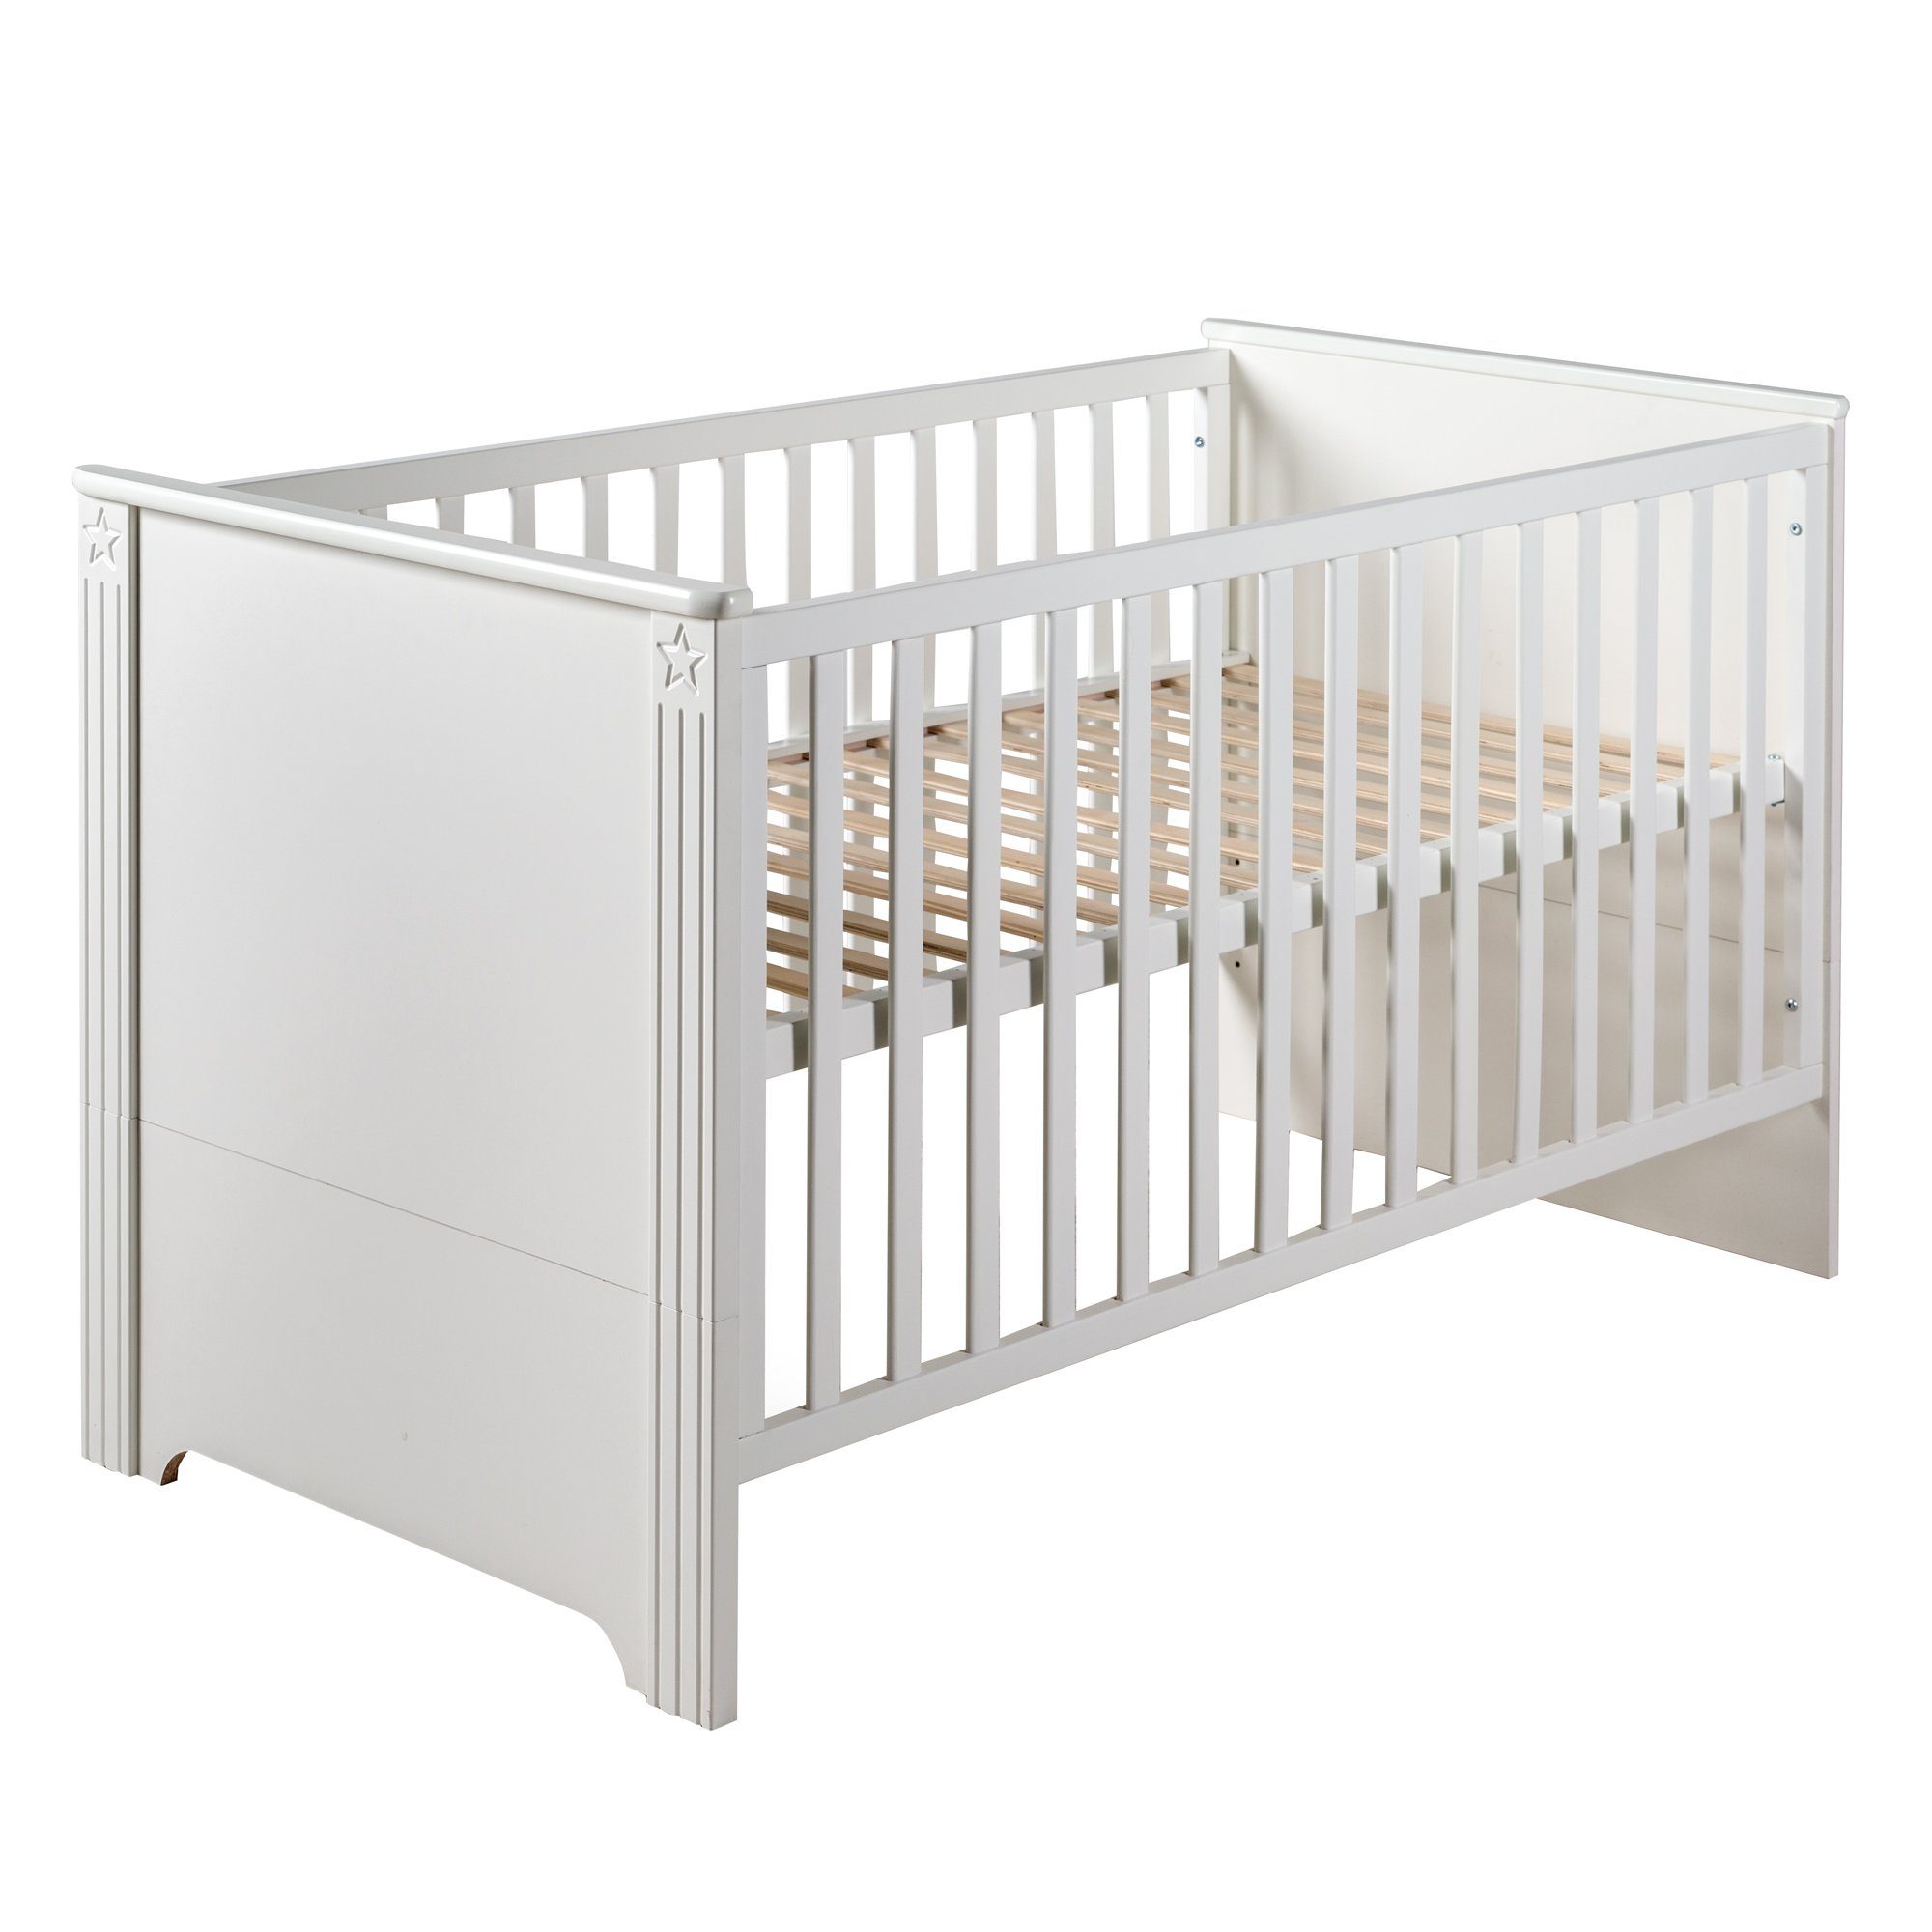 roba® Kinderbett Gitterbett Maxi, 70 x 140 cm, in weiß, Kombi-Kinderbett,  höhenverstellbar, umbaubar zum Juniorbett